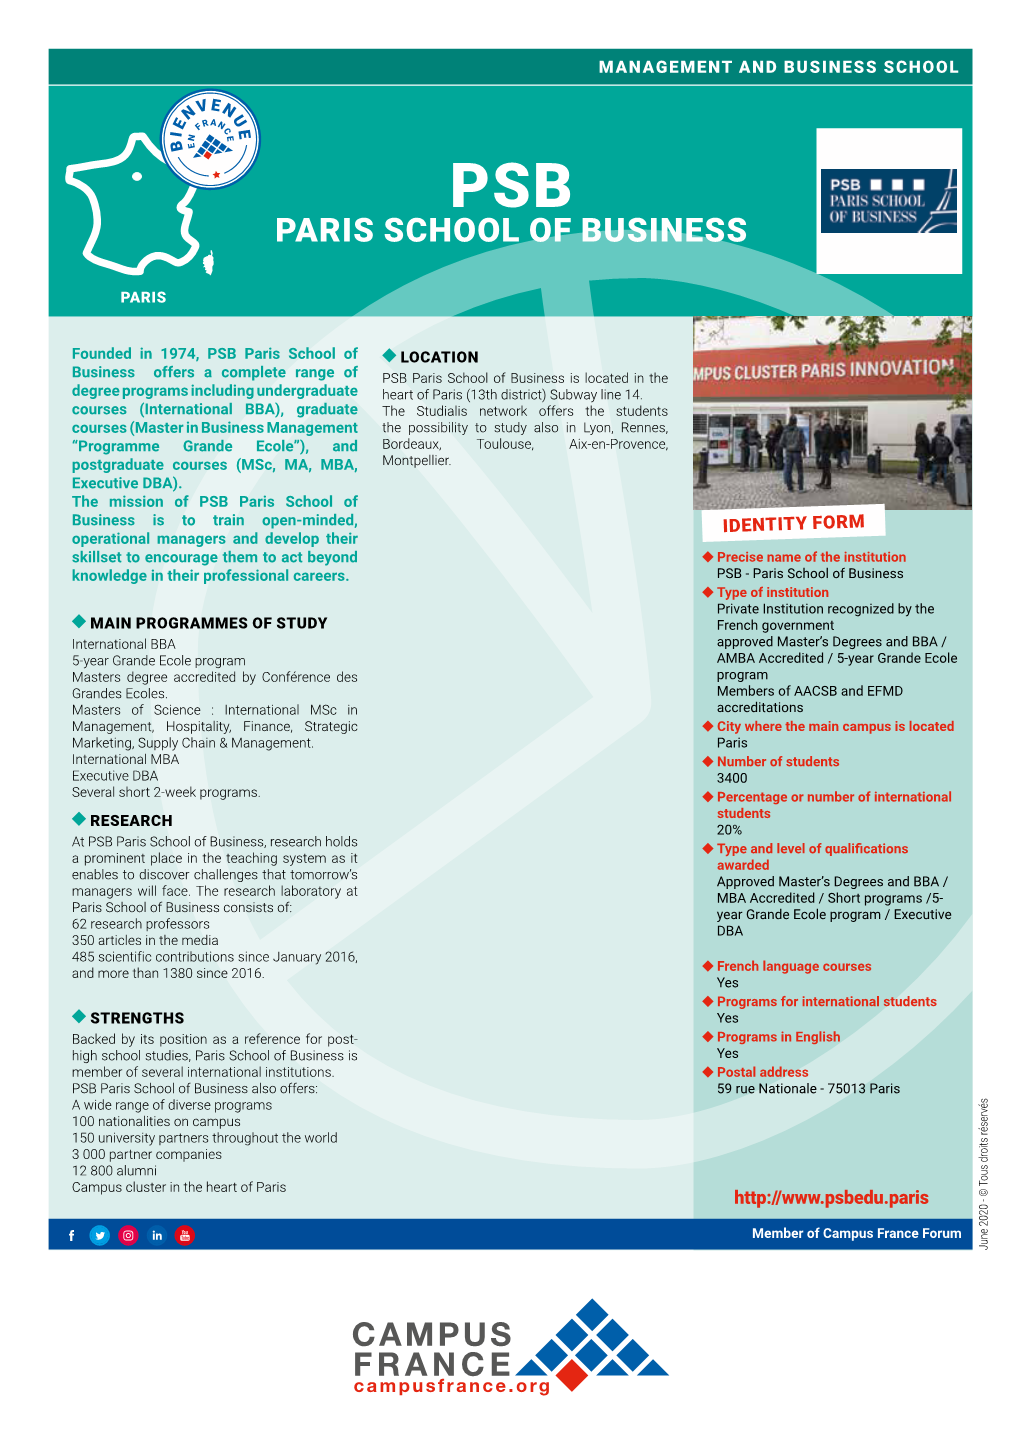 Paris School of Business